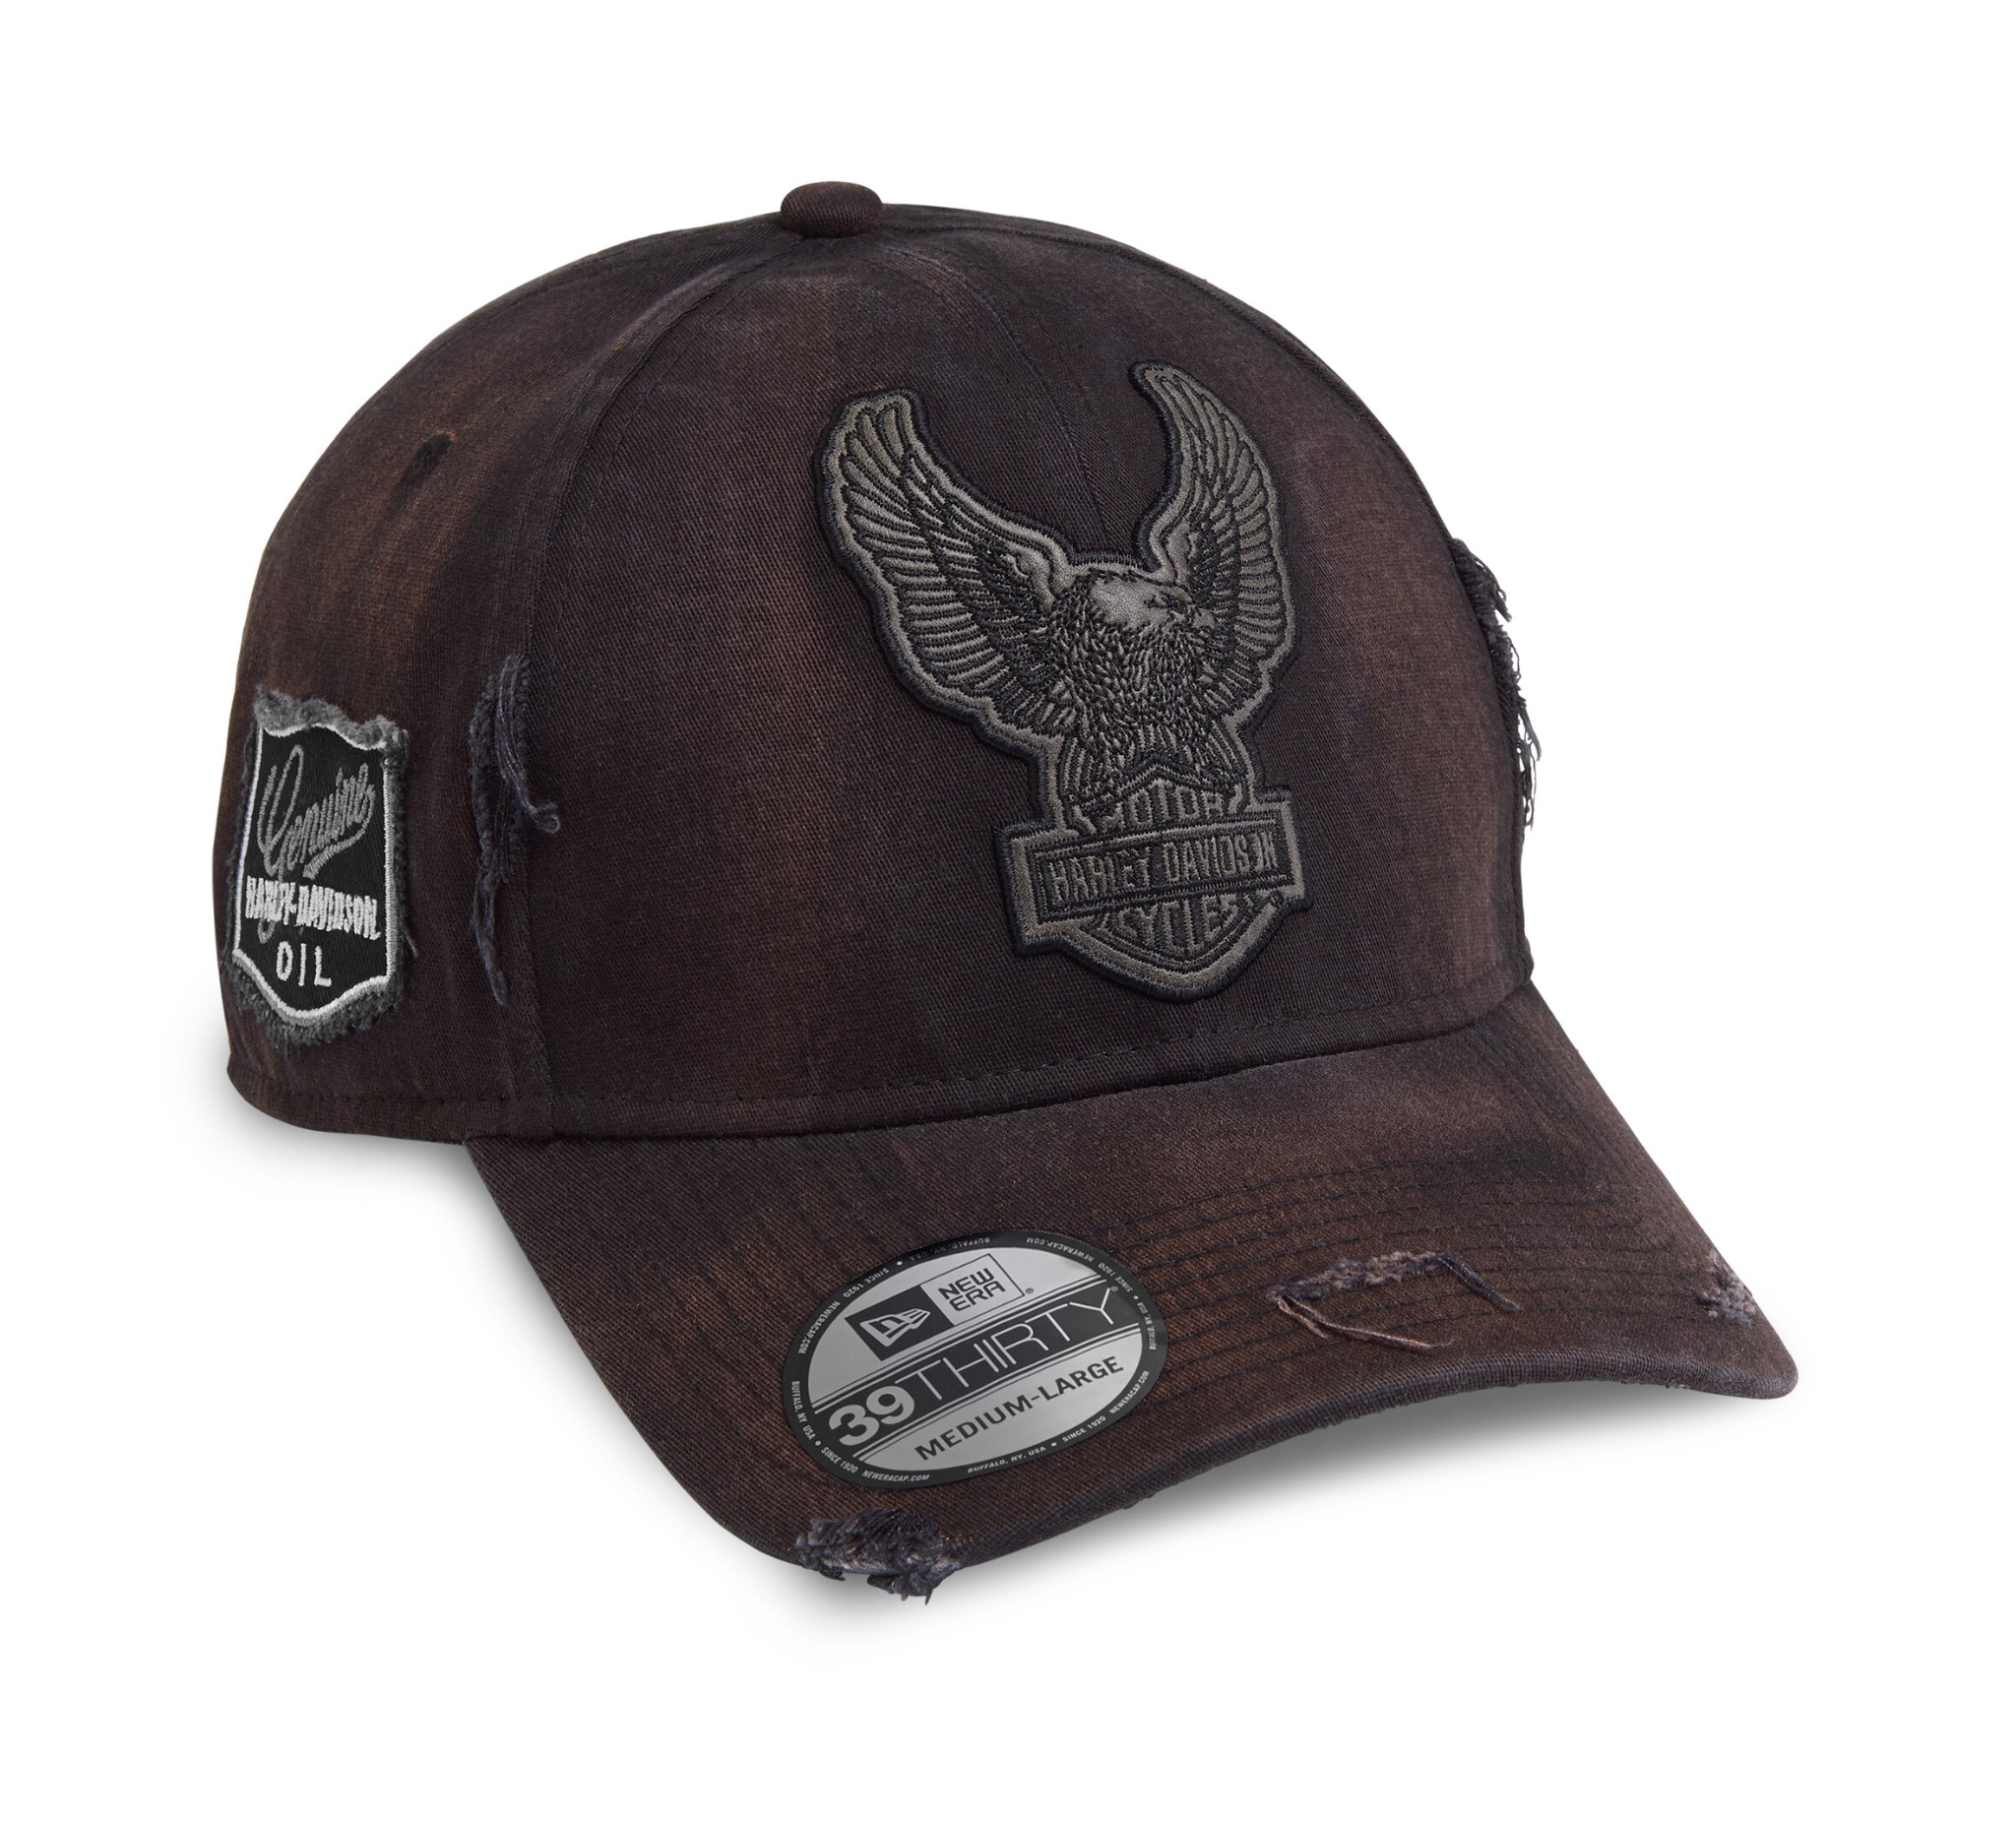 Baseball Hats for Men | Harley-Davidson USA